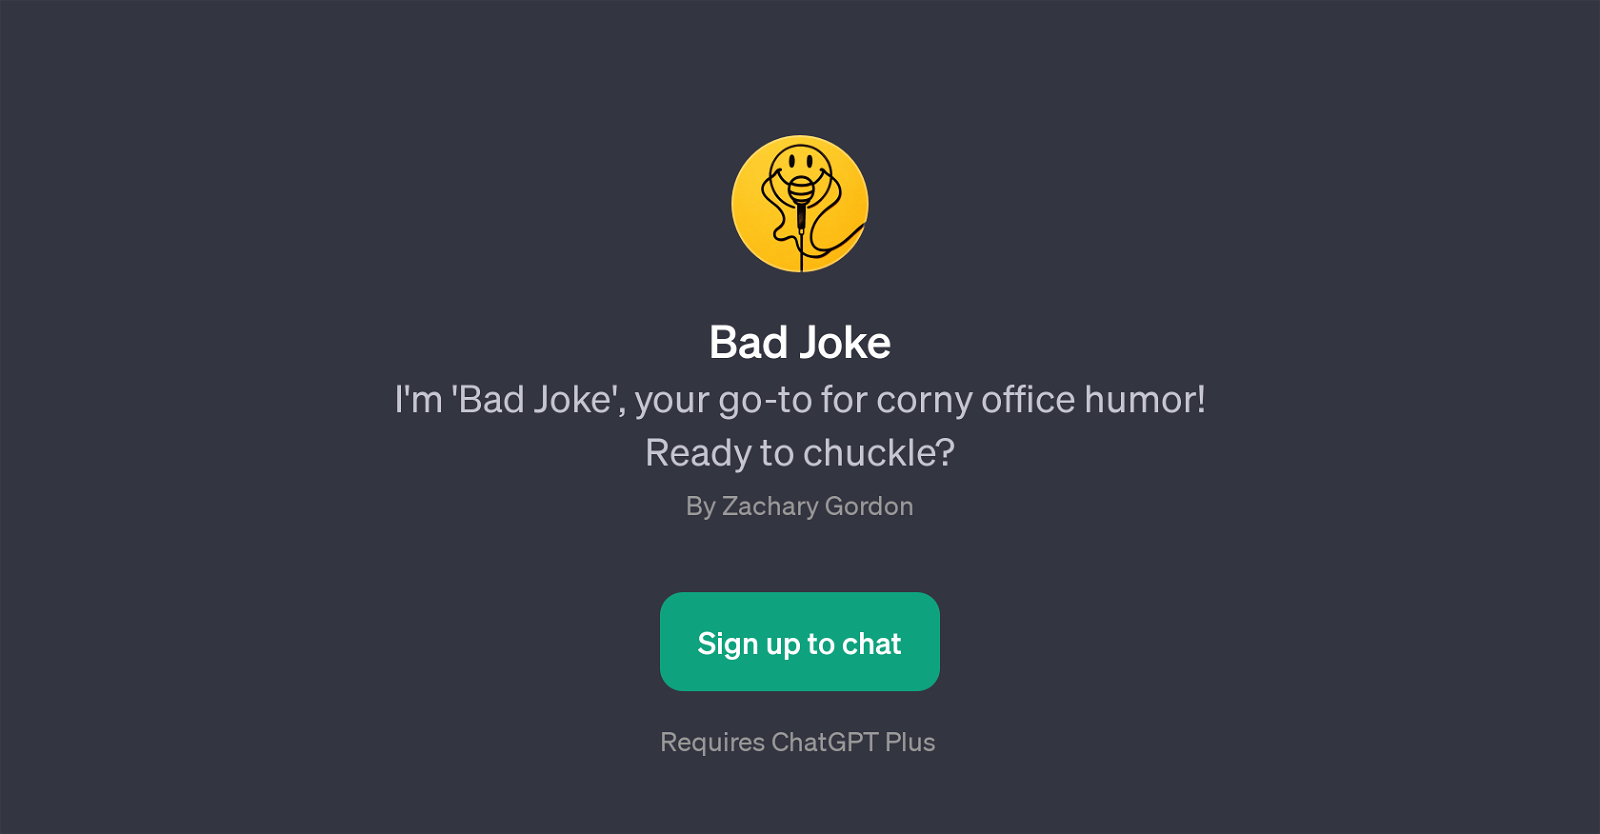 Bad Joke website